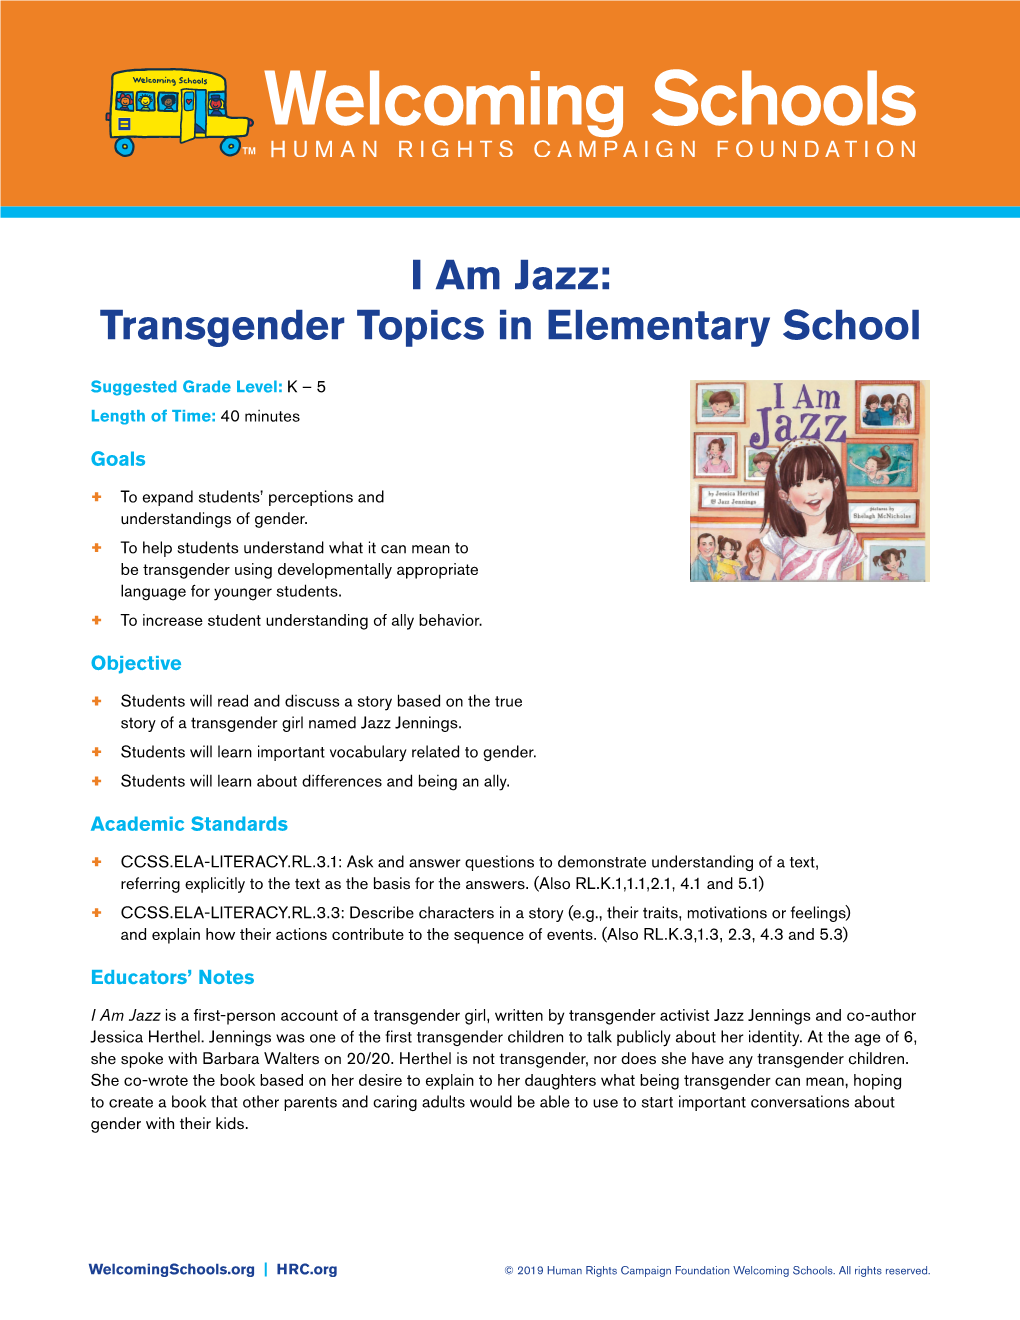 I Am Jazz: Transgender Topics in Elementary School